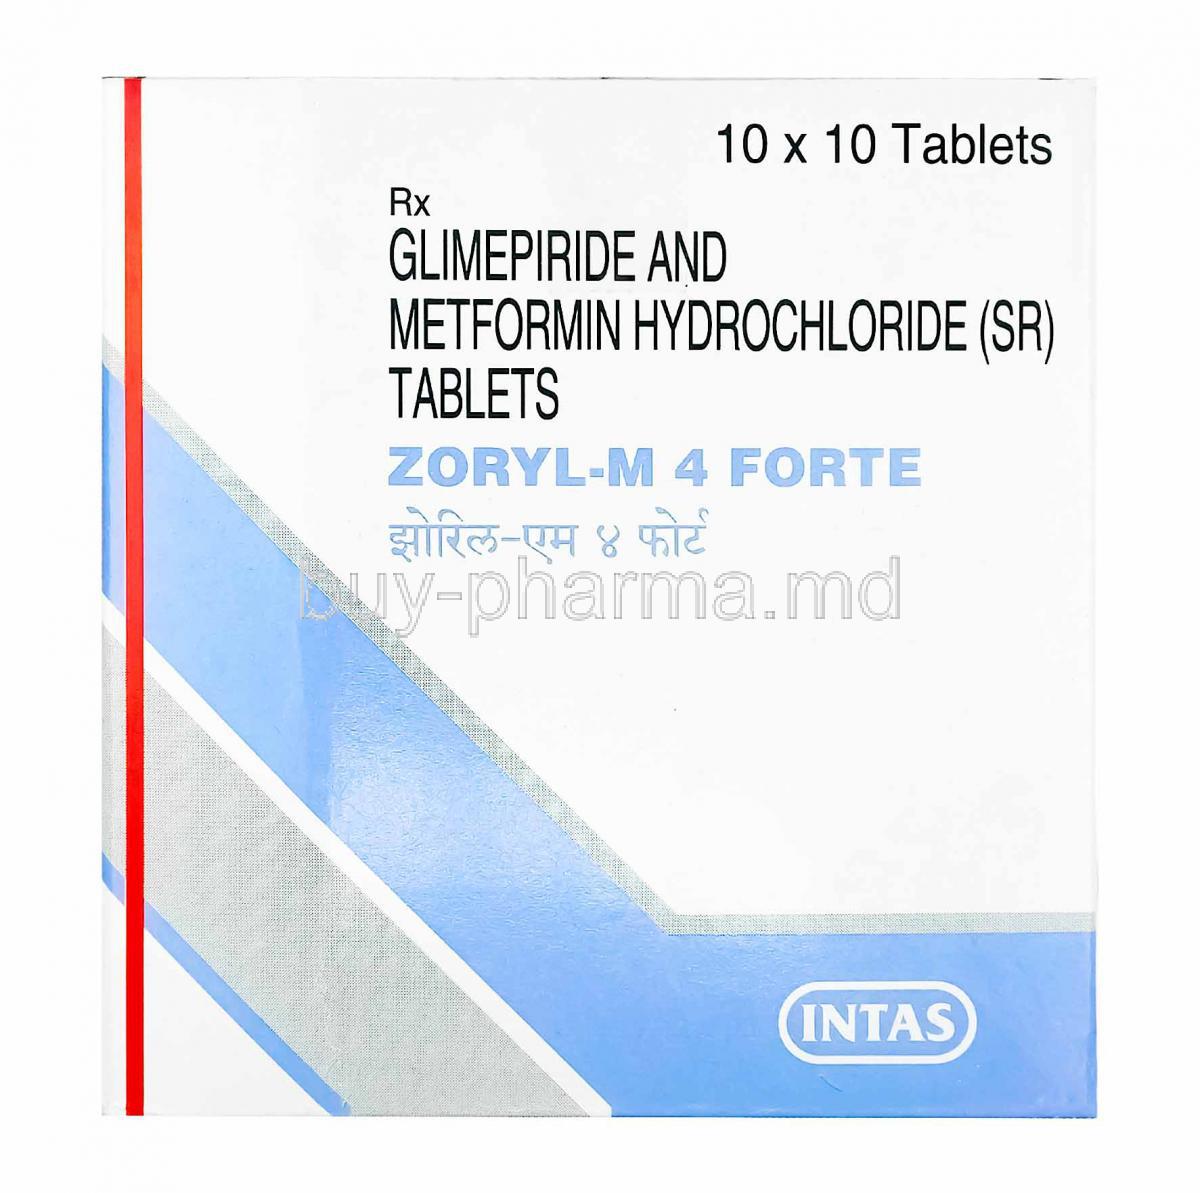 Zoryl-M Forte, Glimepiride and Metformin 4mg